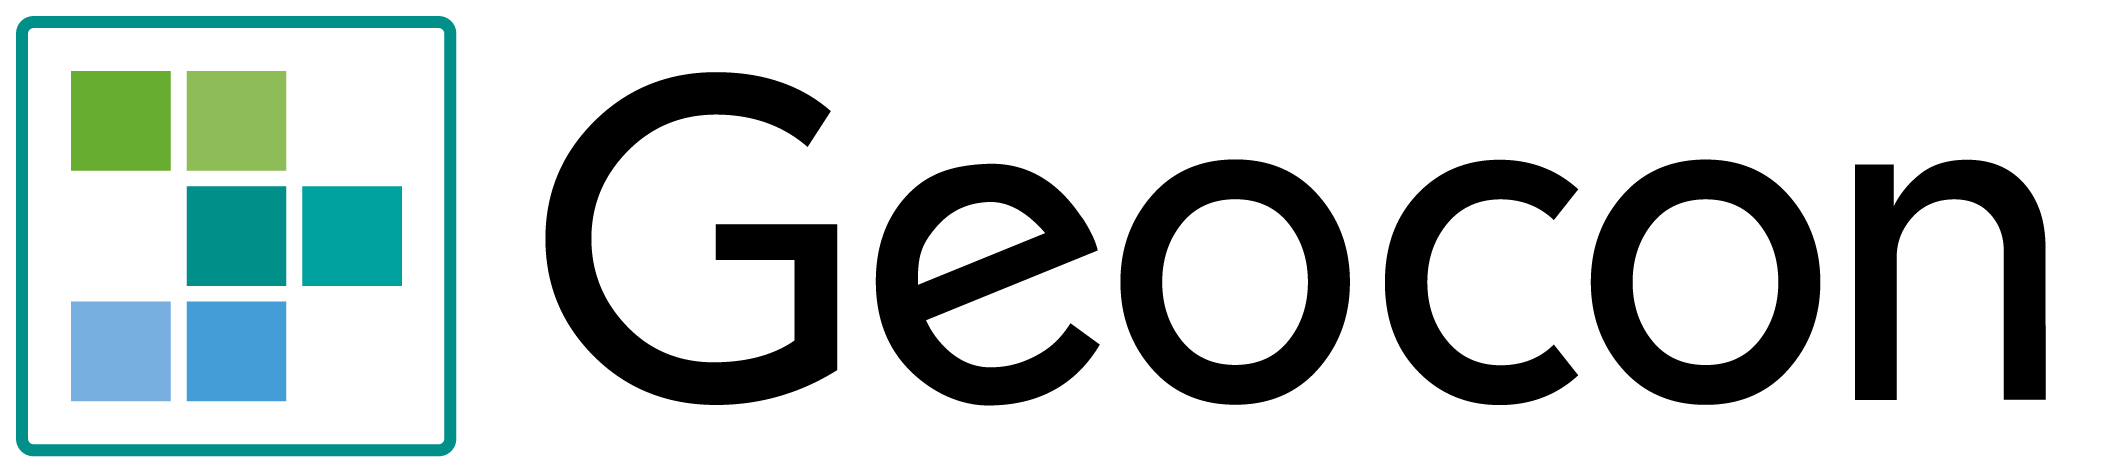 Geocon Software GmbH Logo